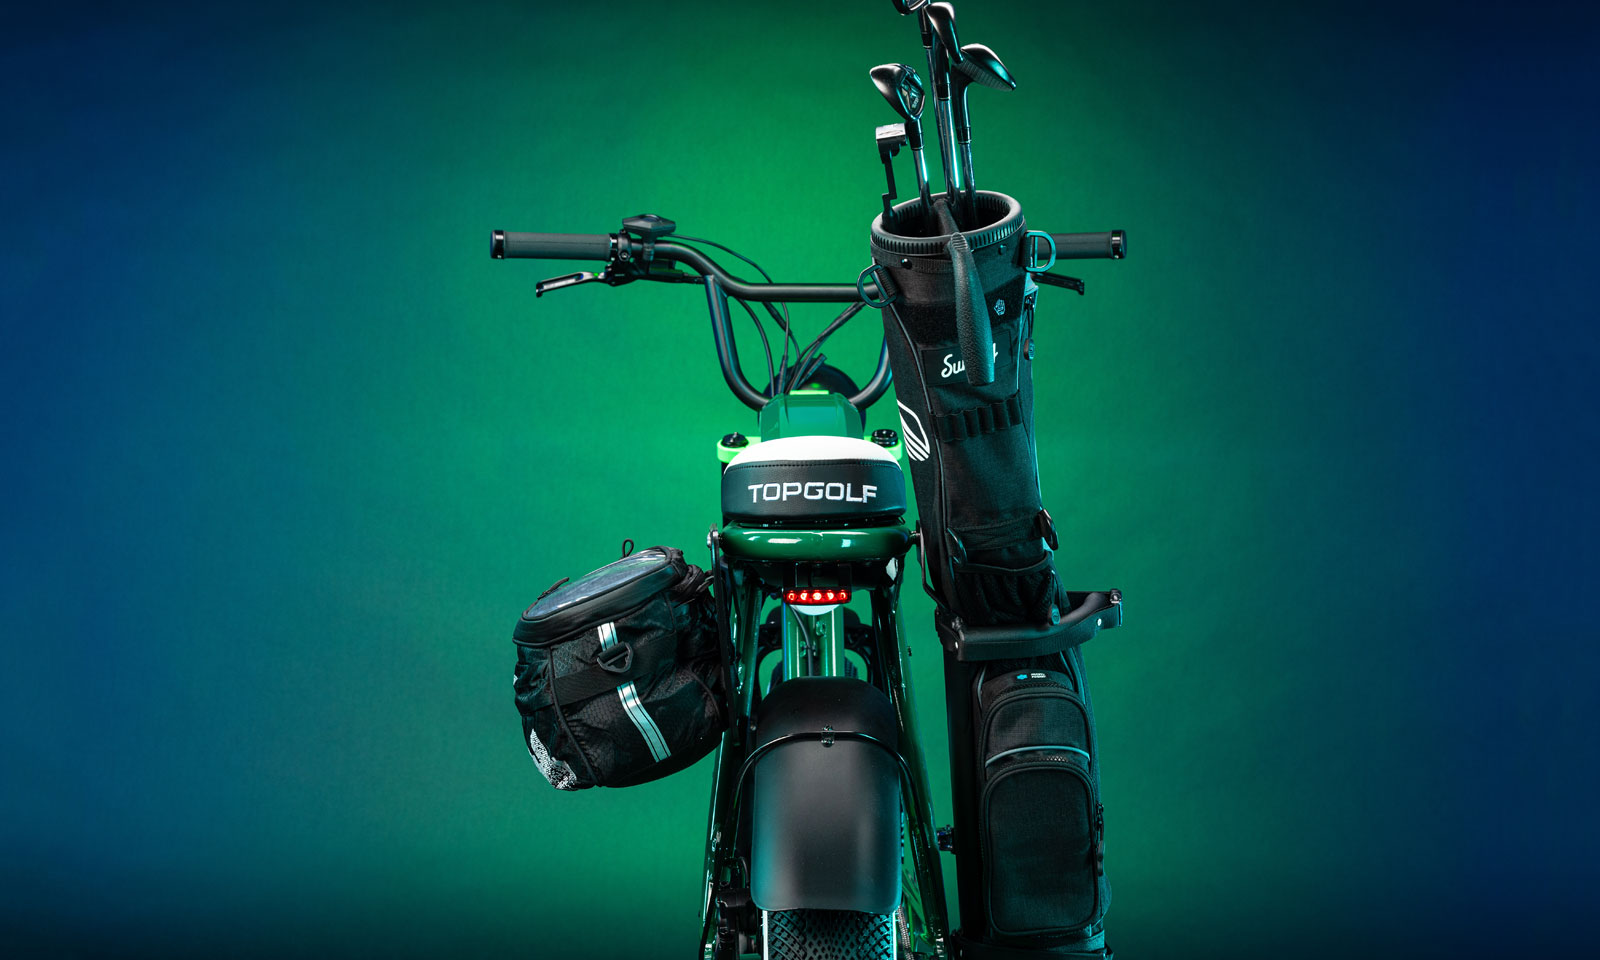 Topgolf And Super73 Create An E-Bike for Urban Golfers